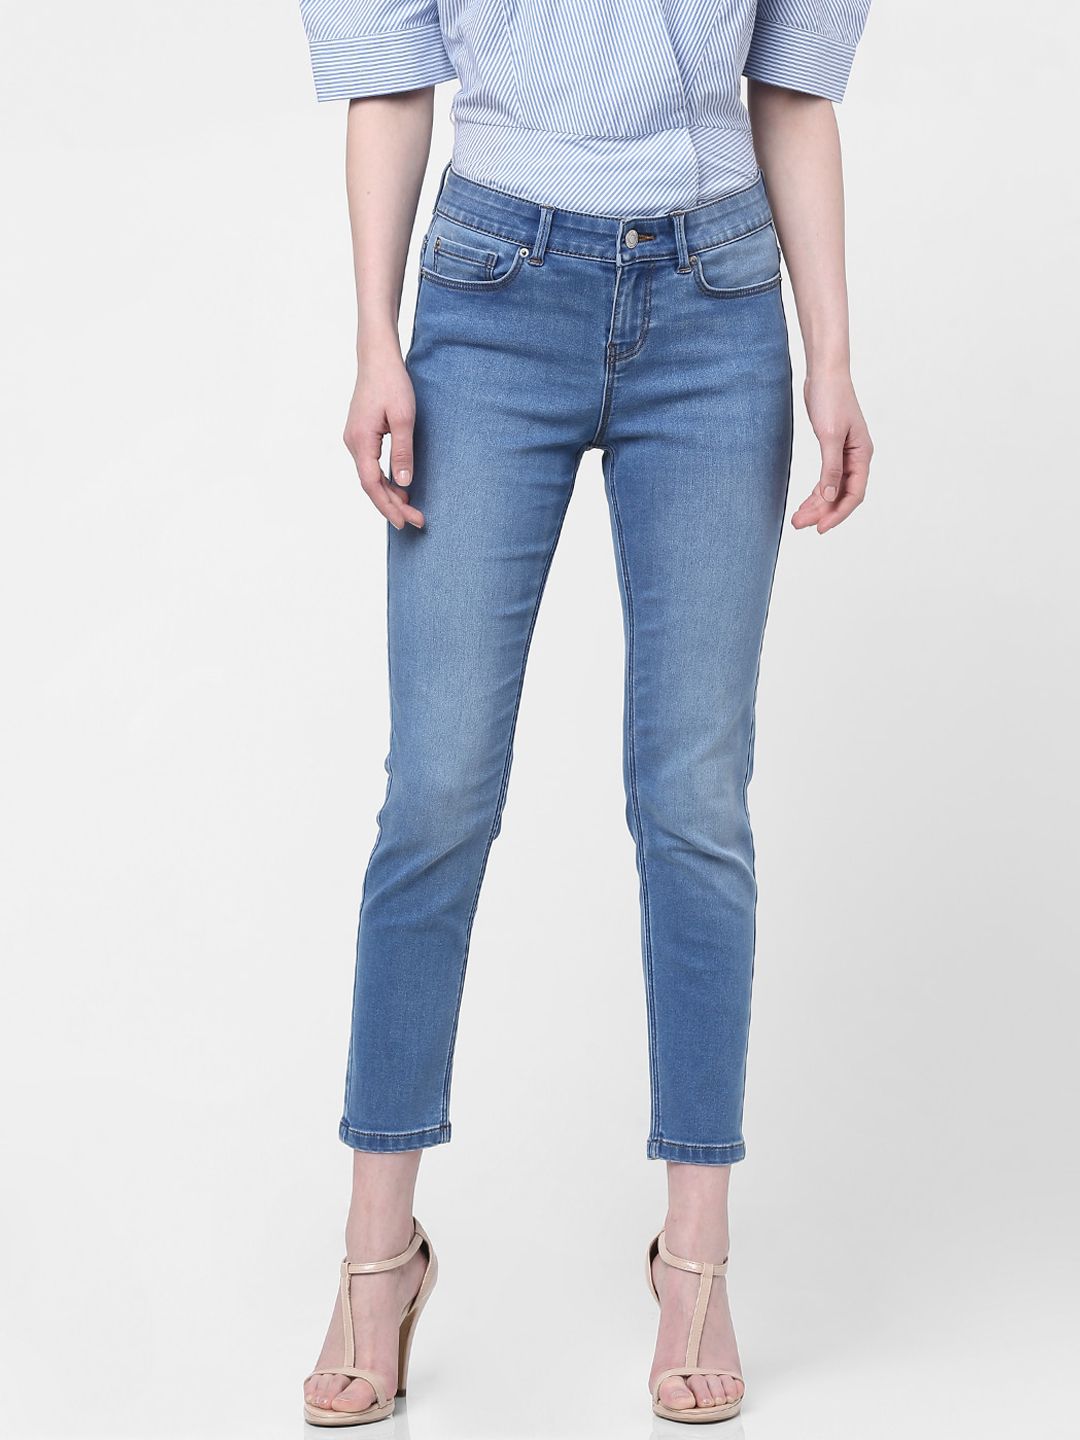 Vero Moda Women Blue Slim Fit Light Fade Crop Cotton Jeans Price in India